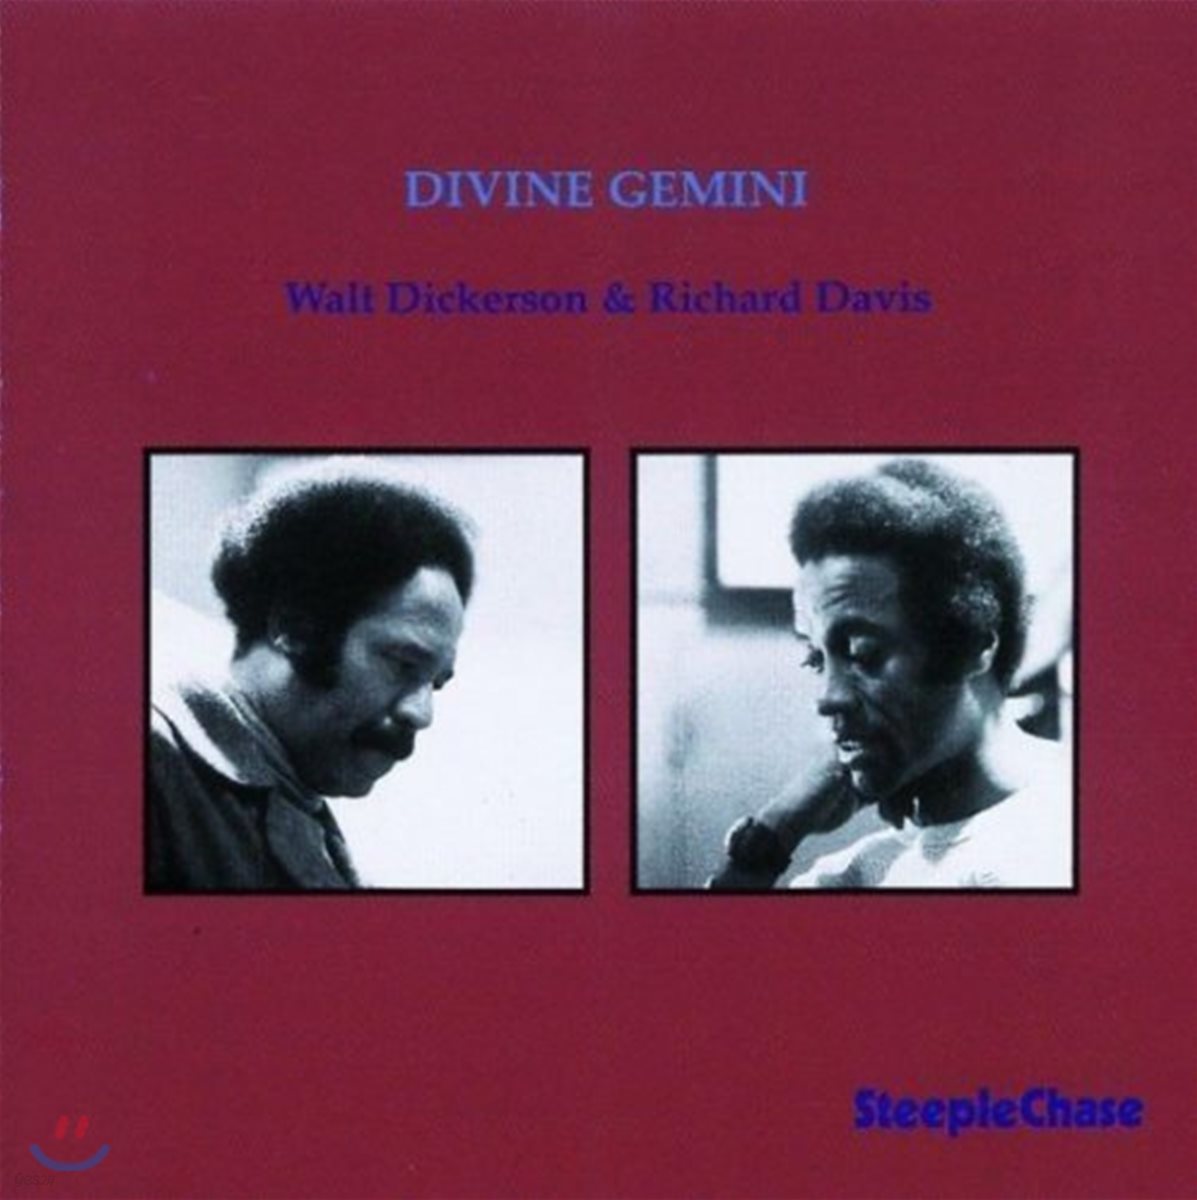 Walt Dickerson &amp; Richard Davis (월트 디커슨 &amp; 리차드 데이비스) - Divine Gemini [LP]